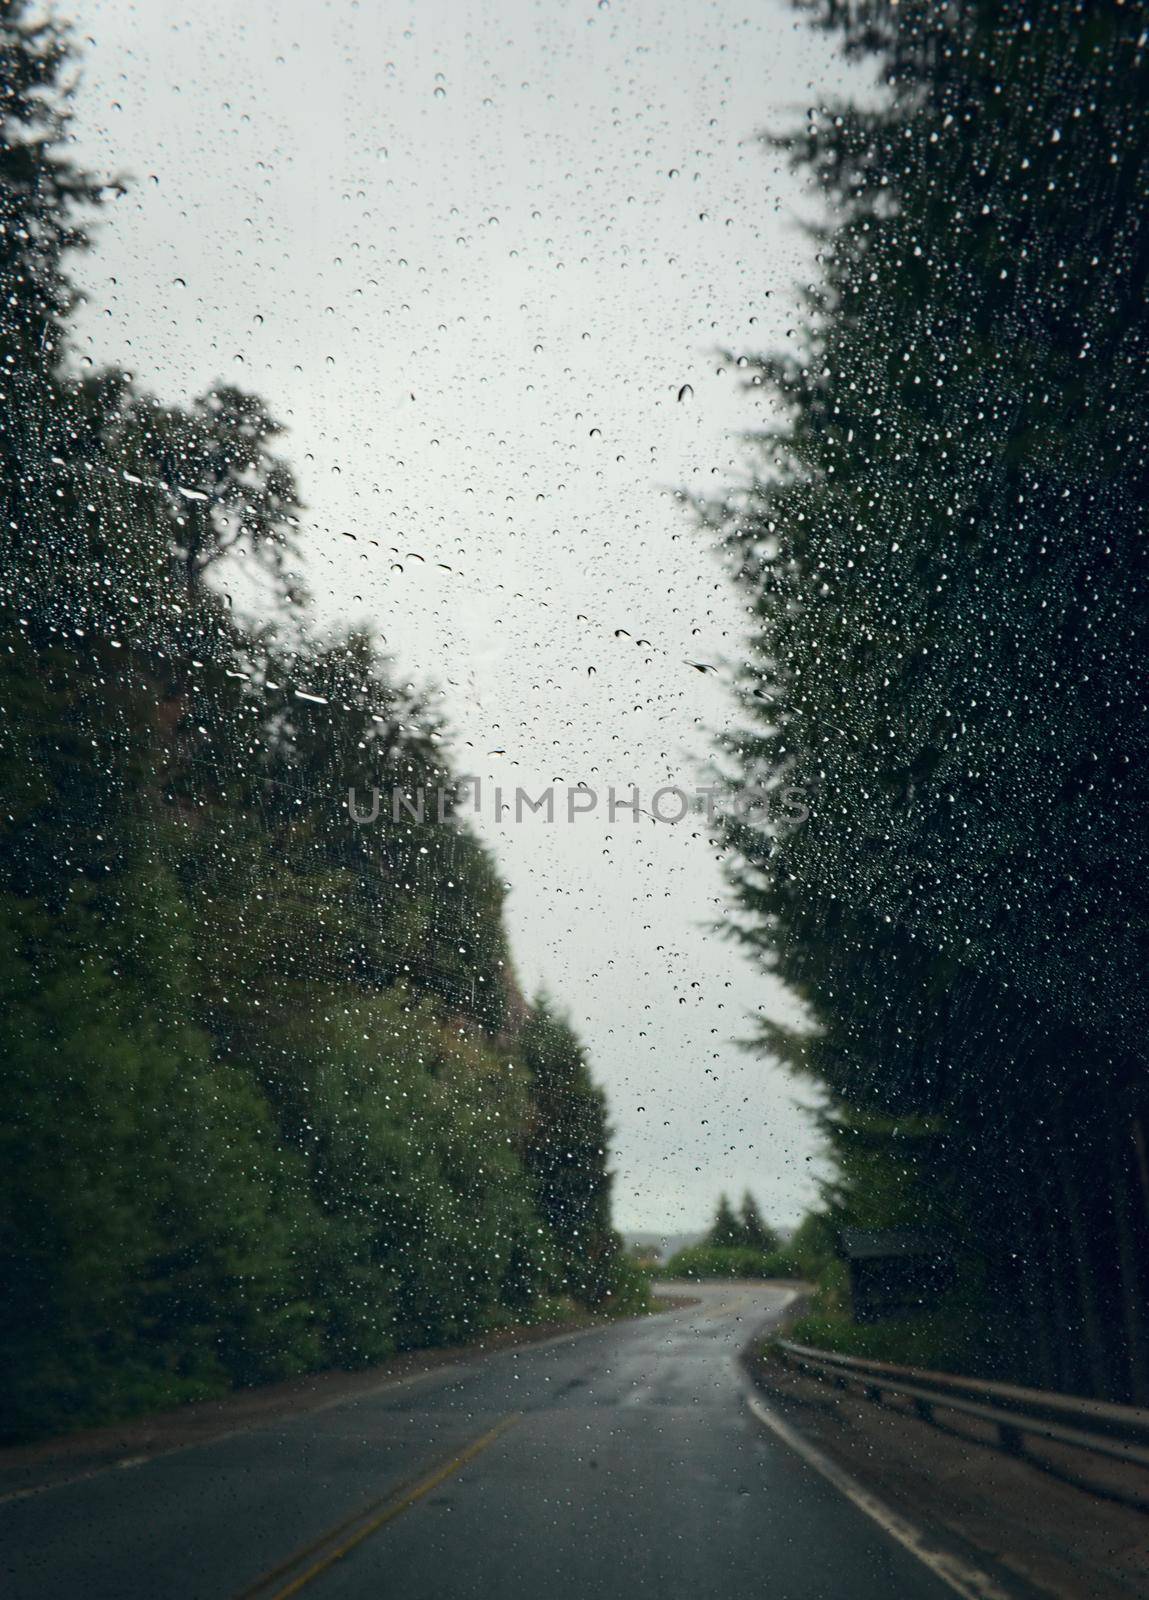 Road trip on a rainy day. by hernan_hyper